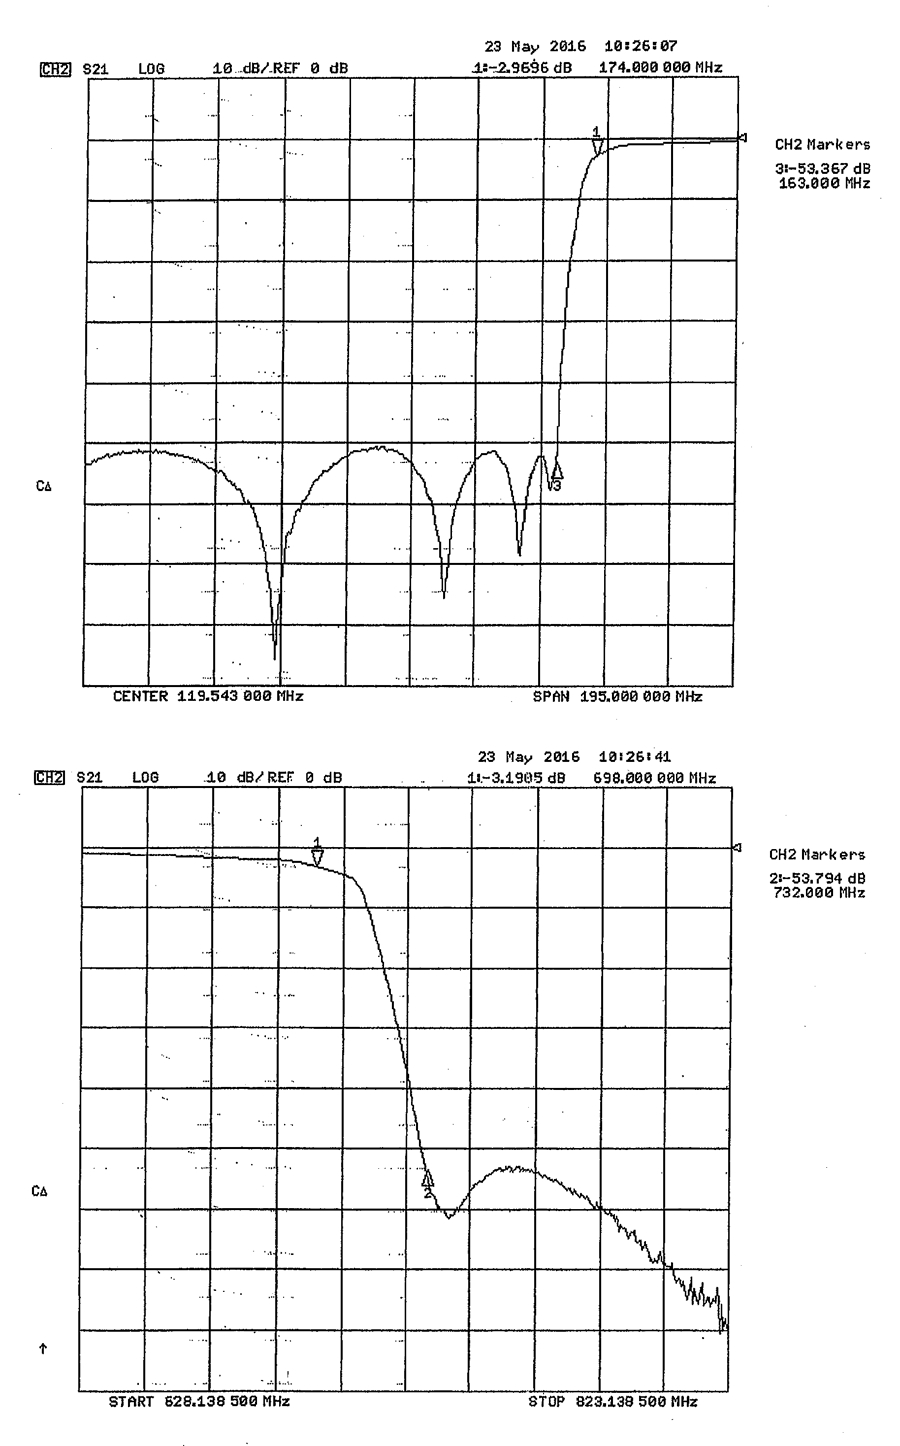 19520 response curve